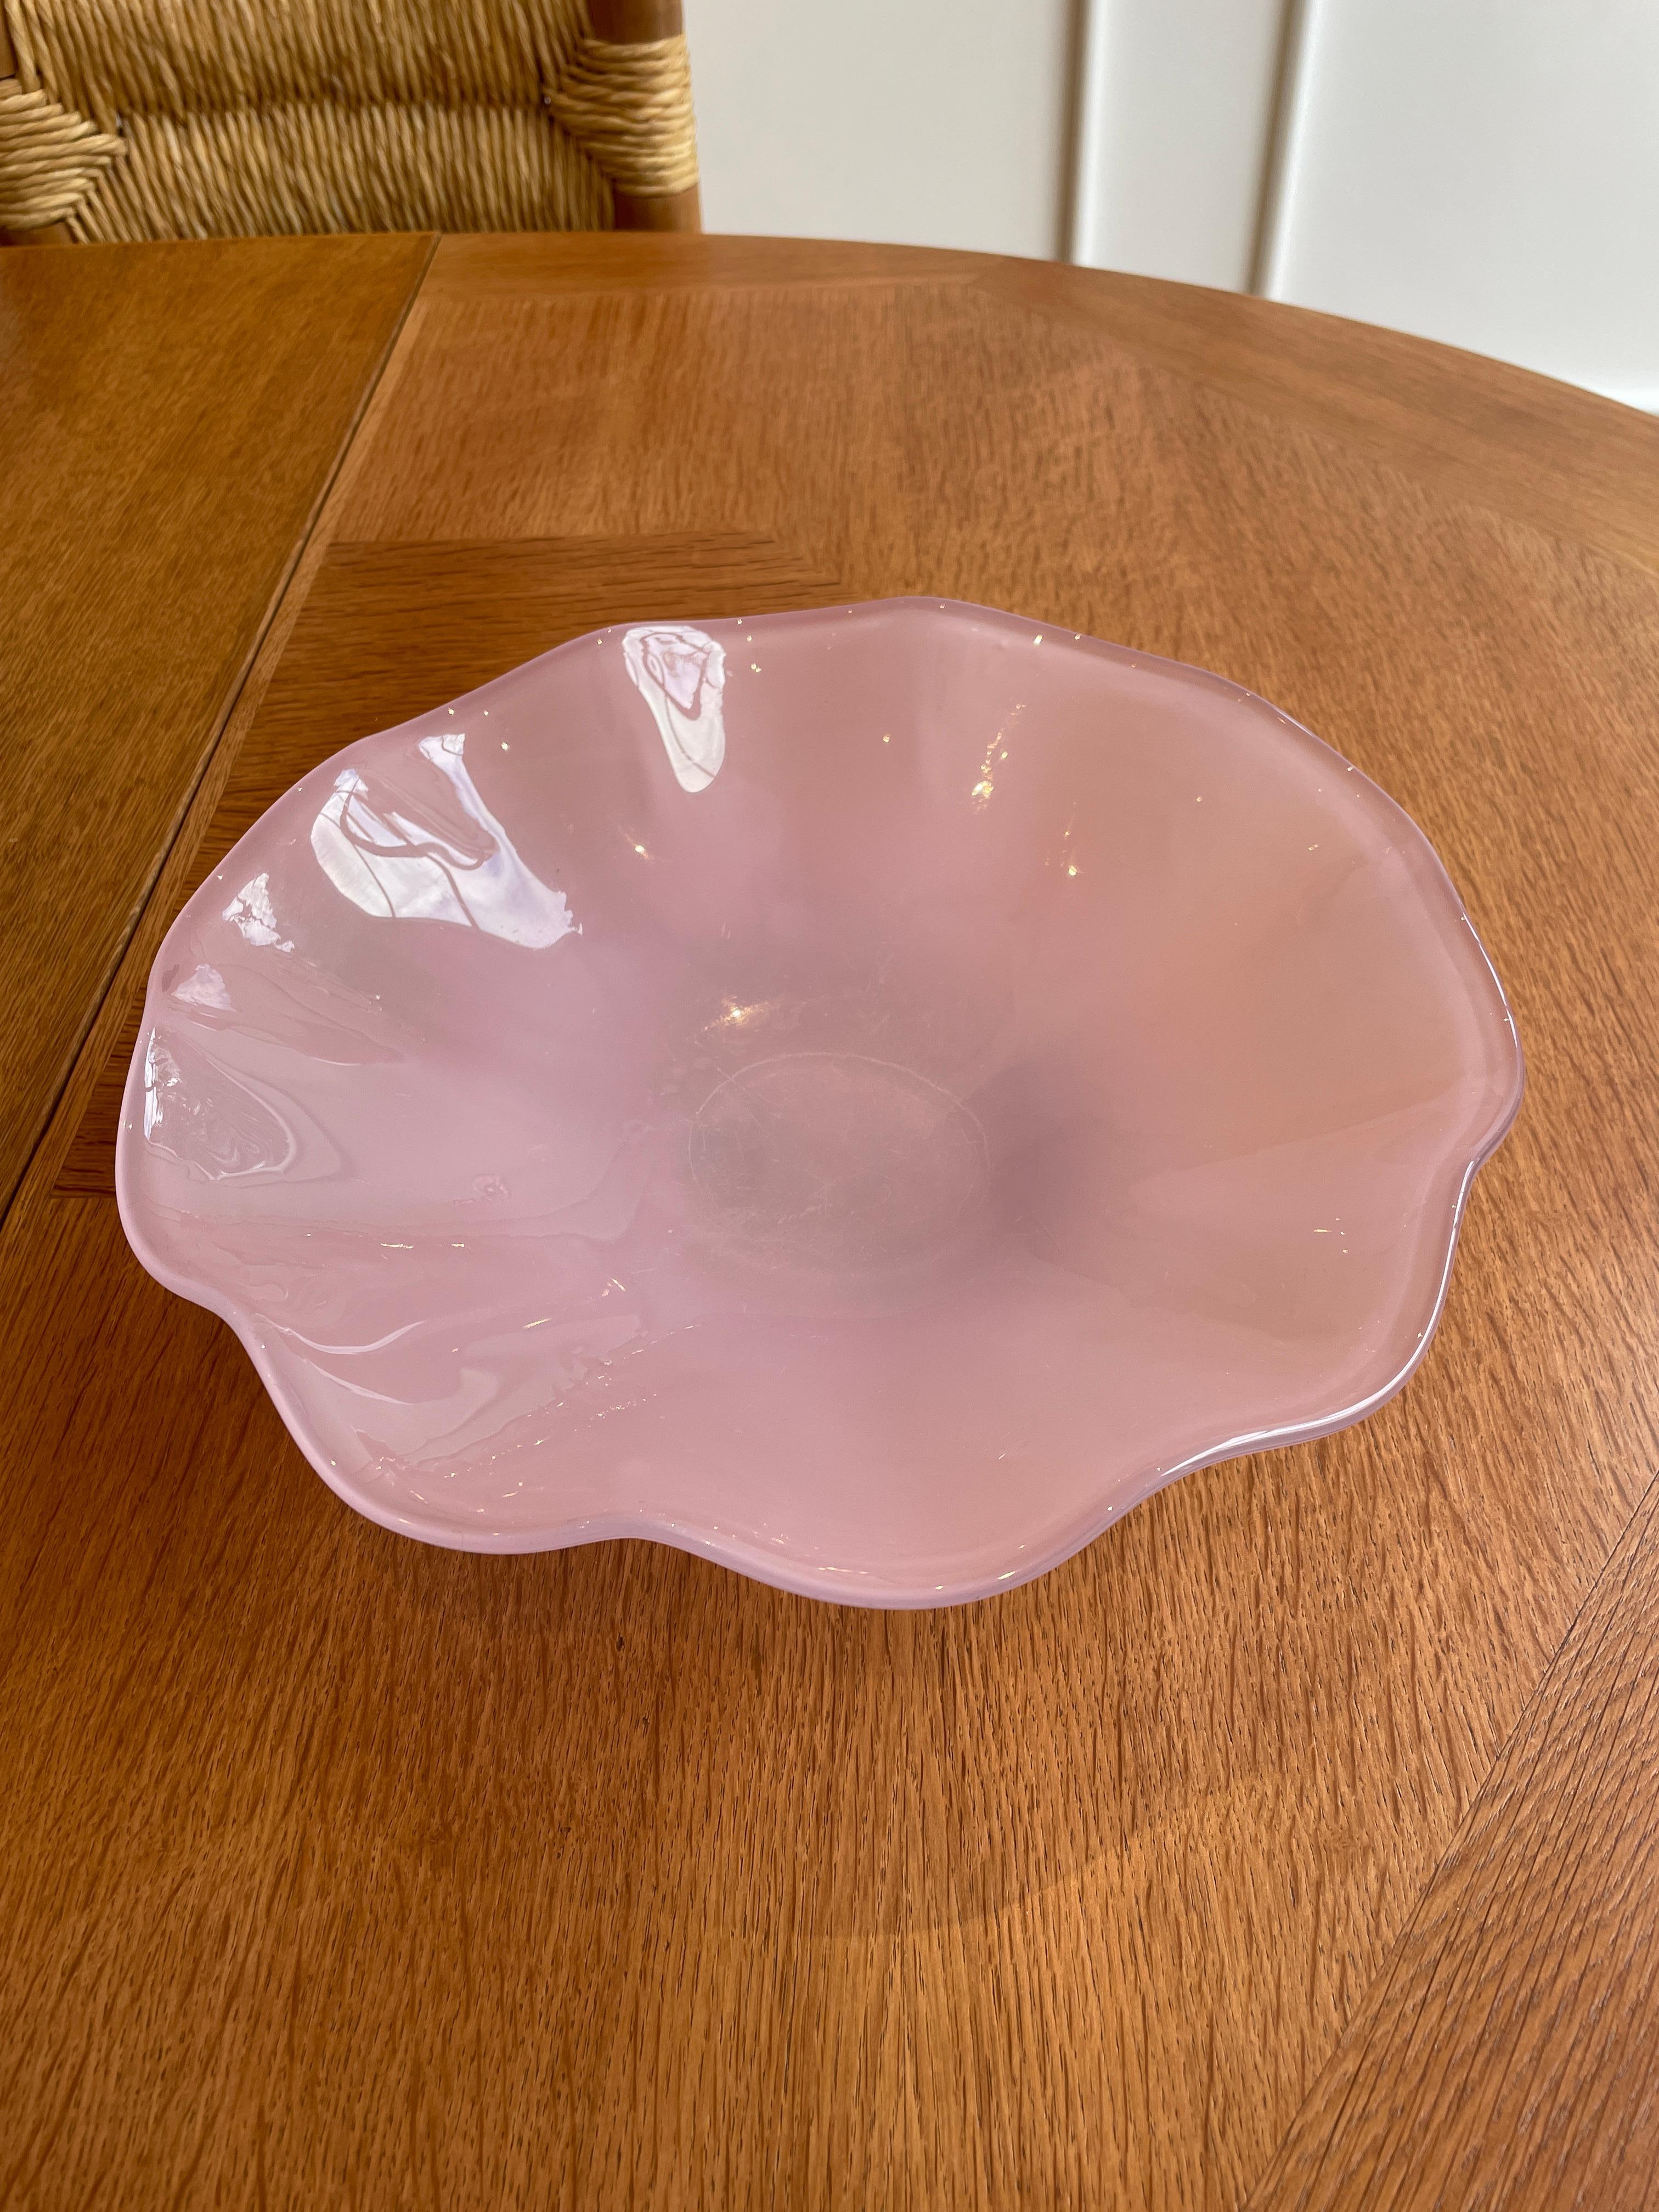 Height: 13cm
Diameter: 32cm

Designer: Sven Palmqvist
Manufacturer: Orrefors
Date: 1940s
Signed: Yes

Materials: Pink Opaline Glass 

Description: Pink opaline “Kantara” glass bowls, 1940s
